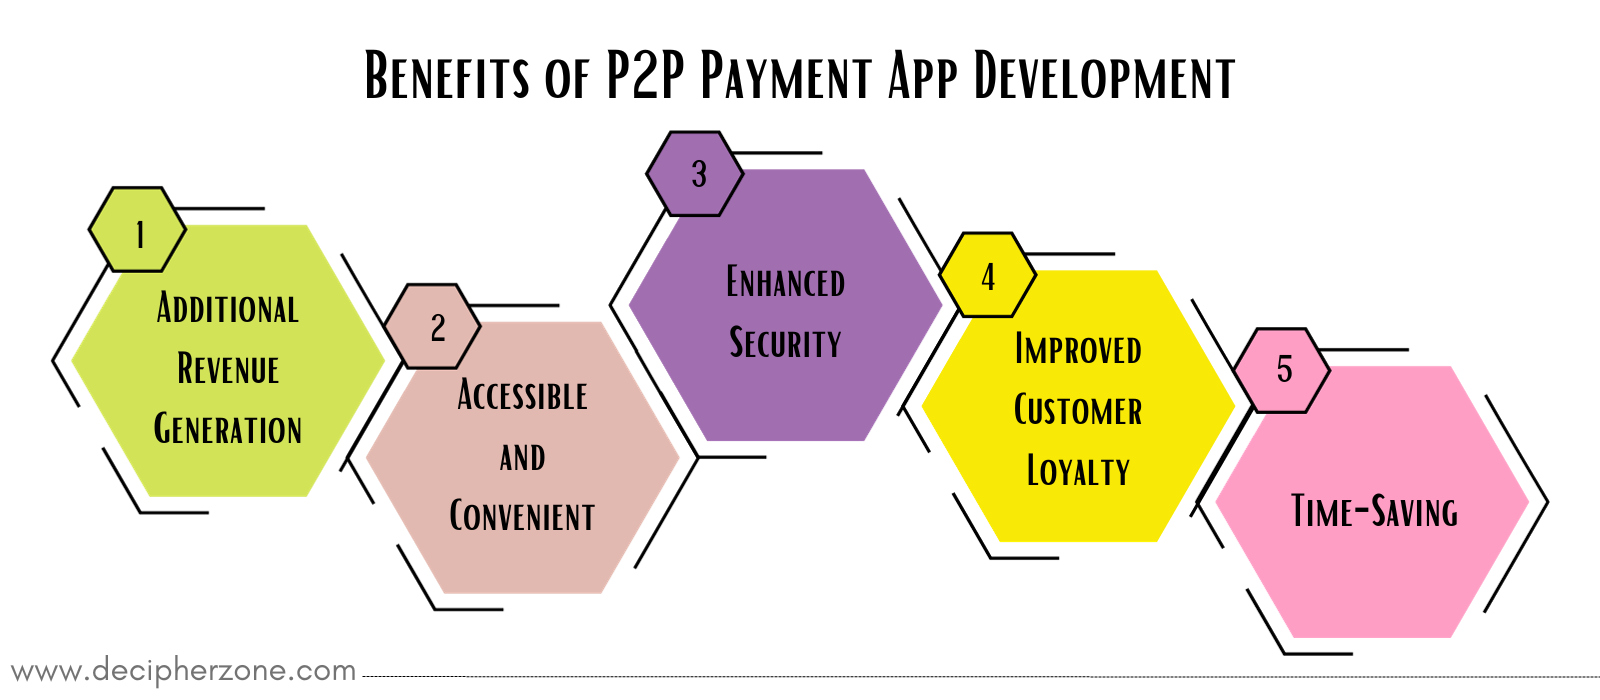 P2P Payment App Development Benefits